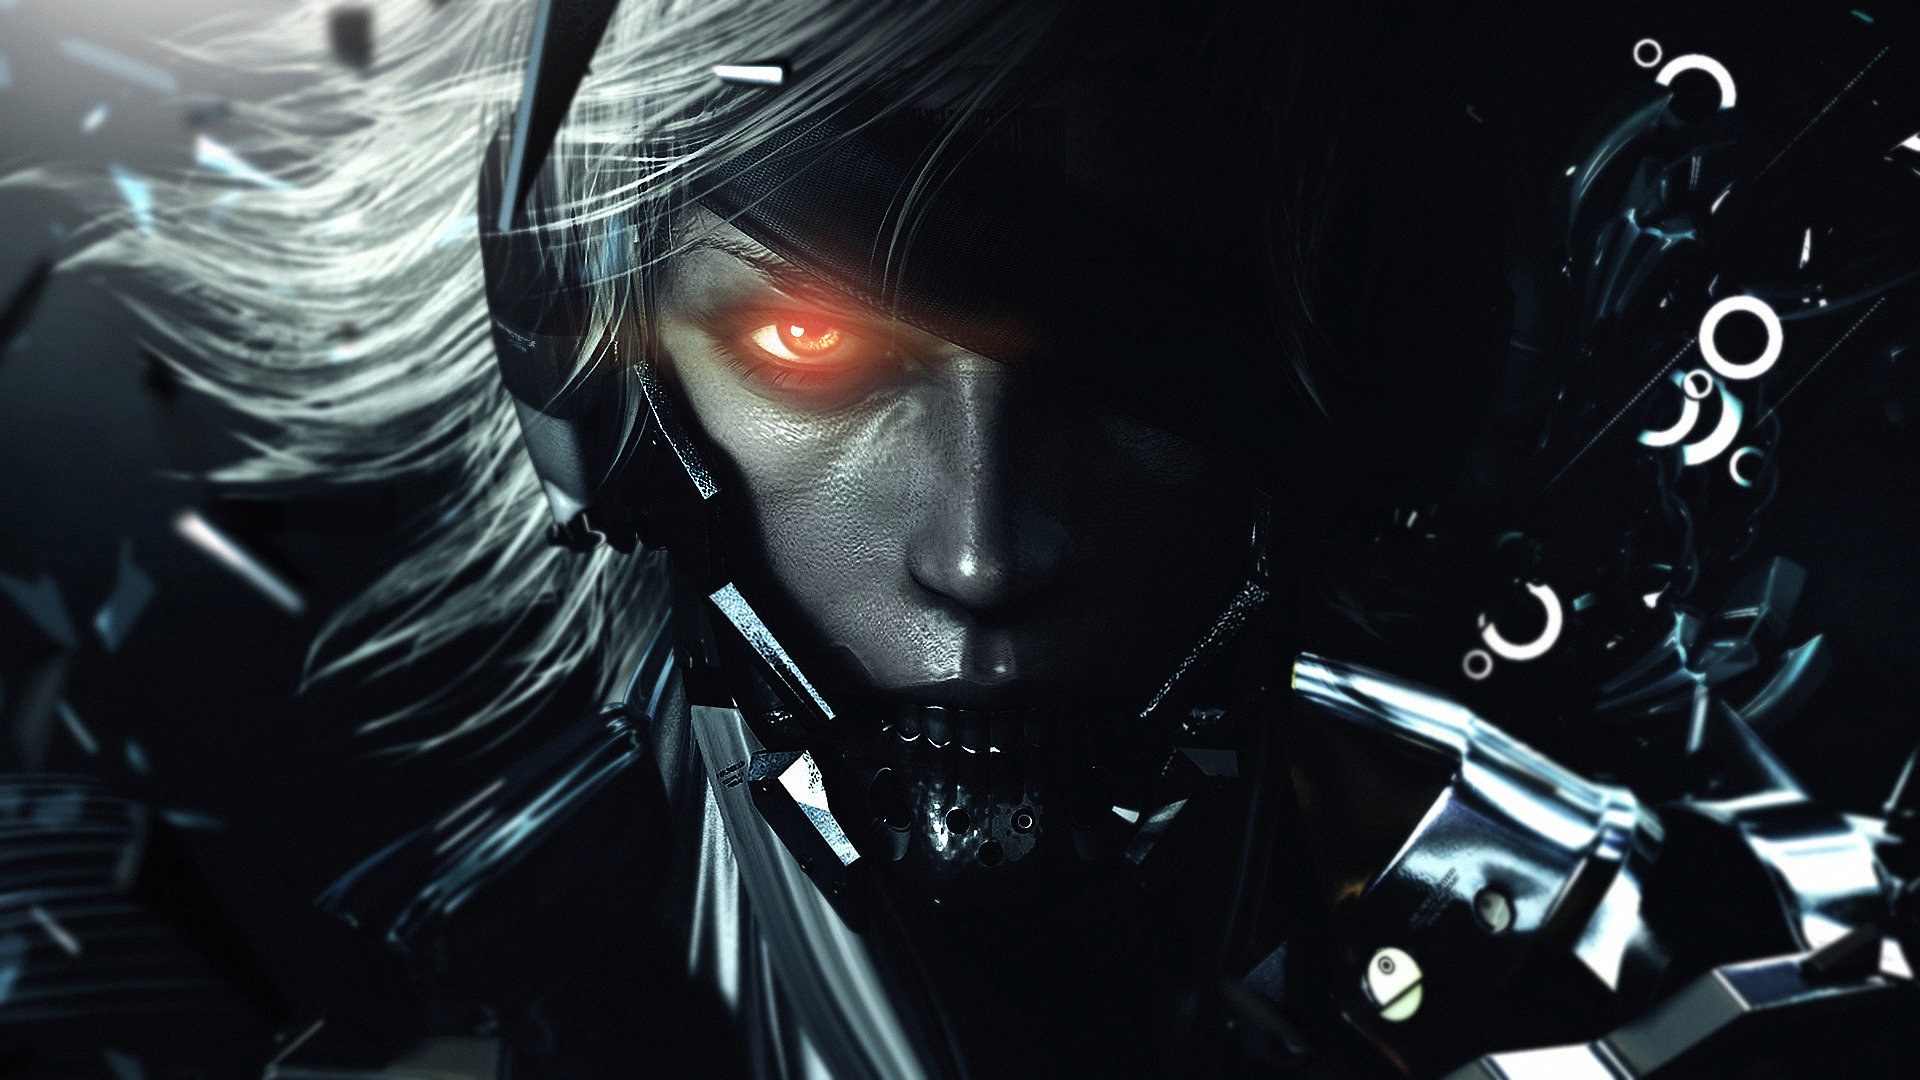 High resolution Metal Gear Rising: Revengeance (MGR) hd 1920x1080 wallpaper ID:130616 for computer